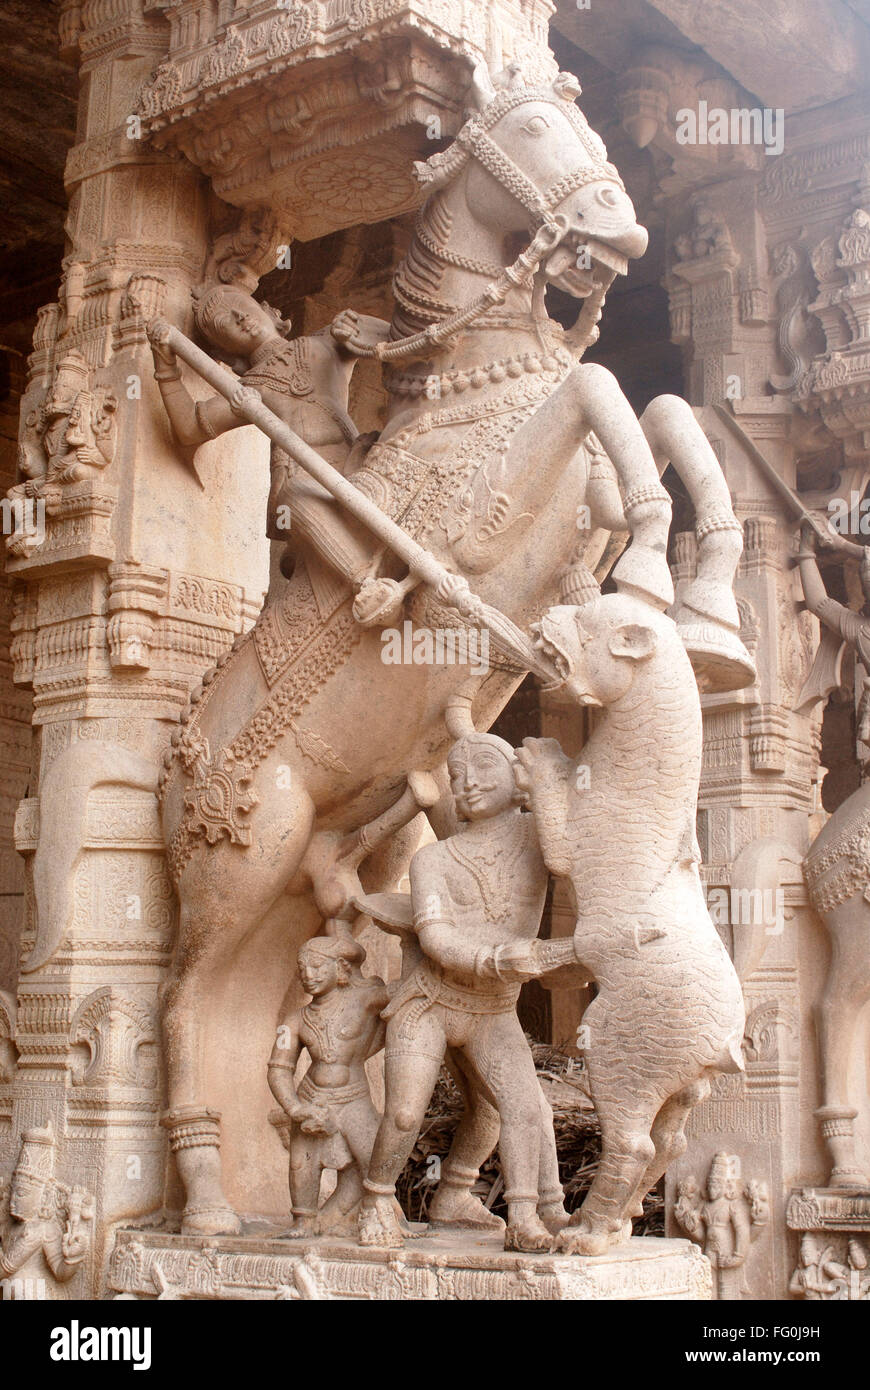 Carved statue warrior horse fighting wild animal pillar Sesharayar Mandapam Ranganathswami temple Srirangam Trichy Tamil Nadu Stock Photo